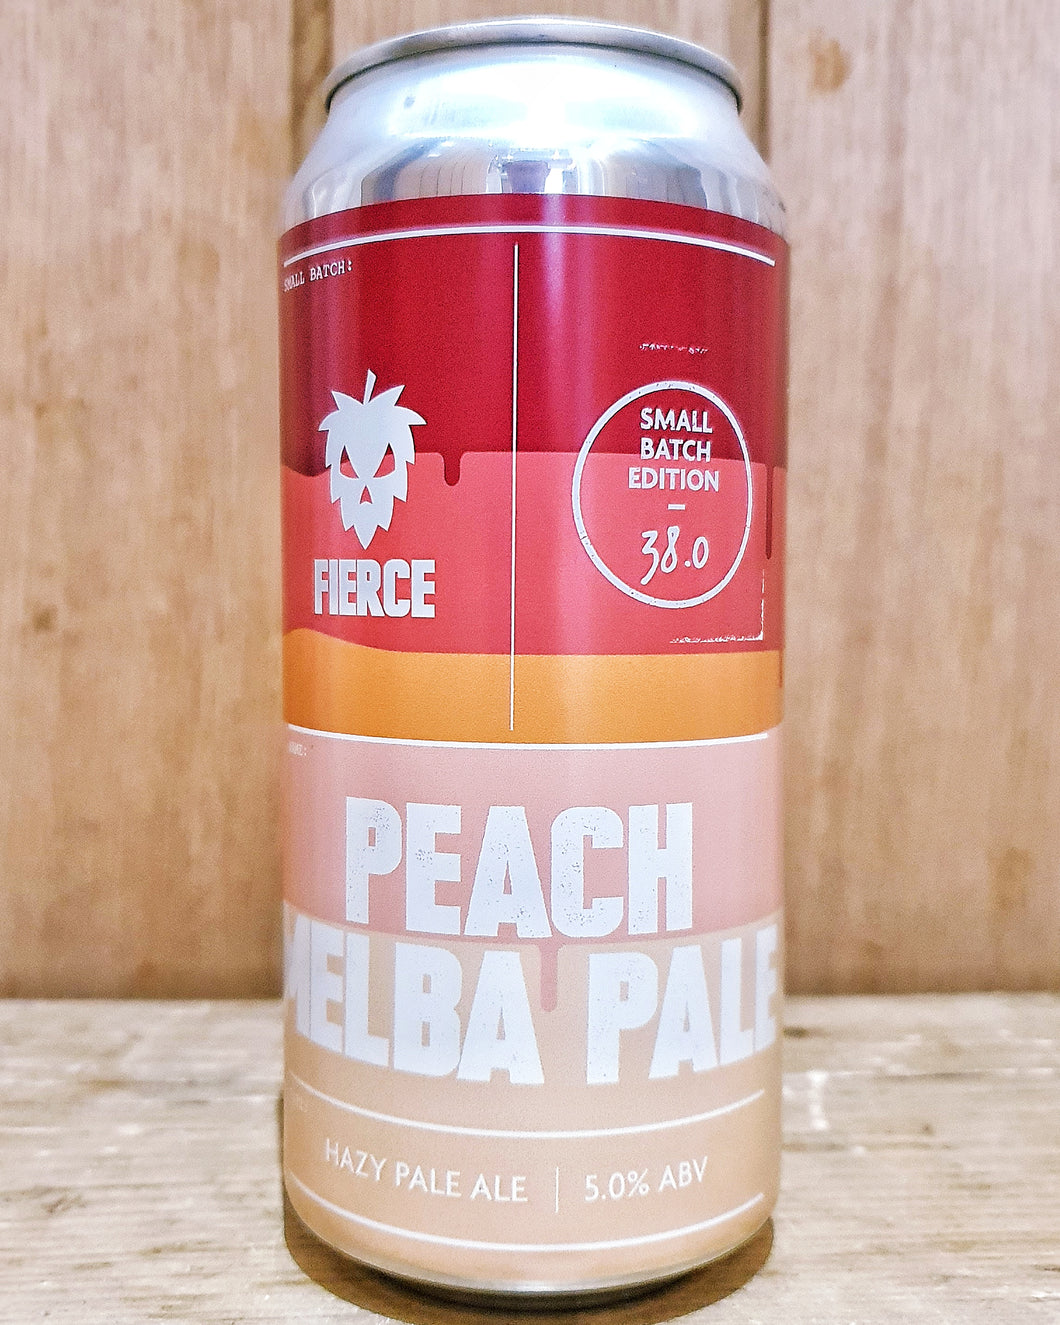 Fierce Beer - Peach Melba Pale